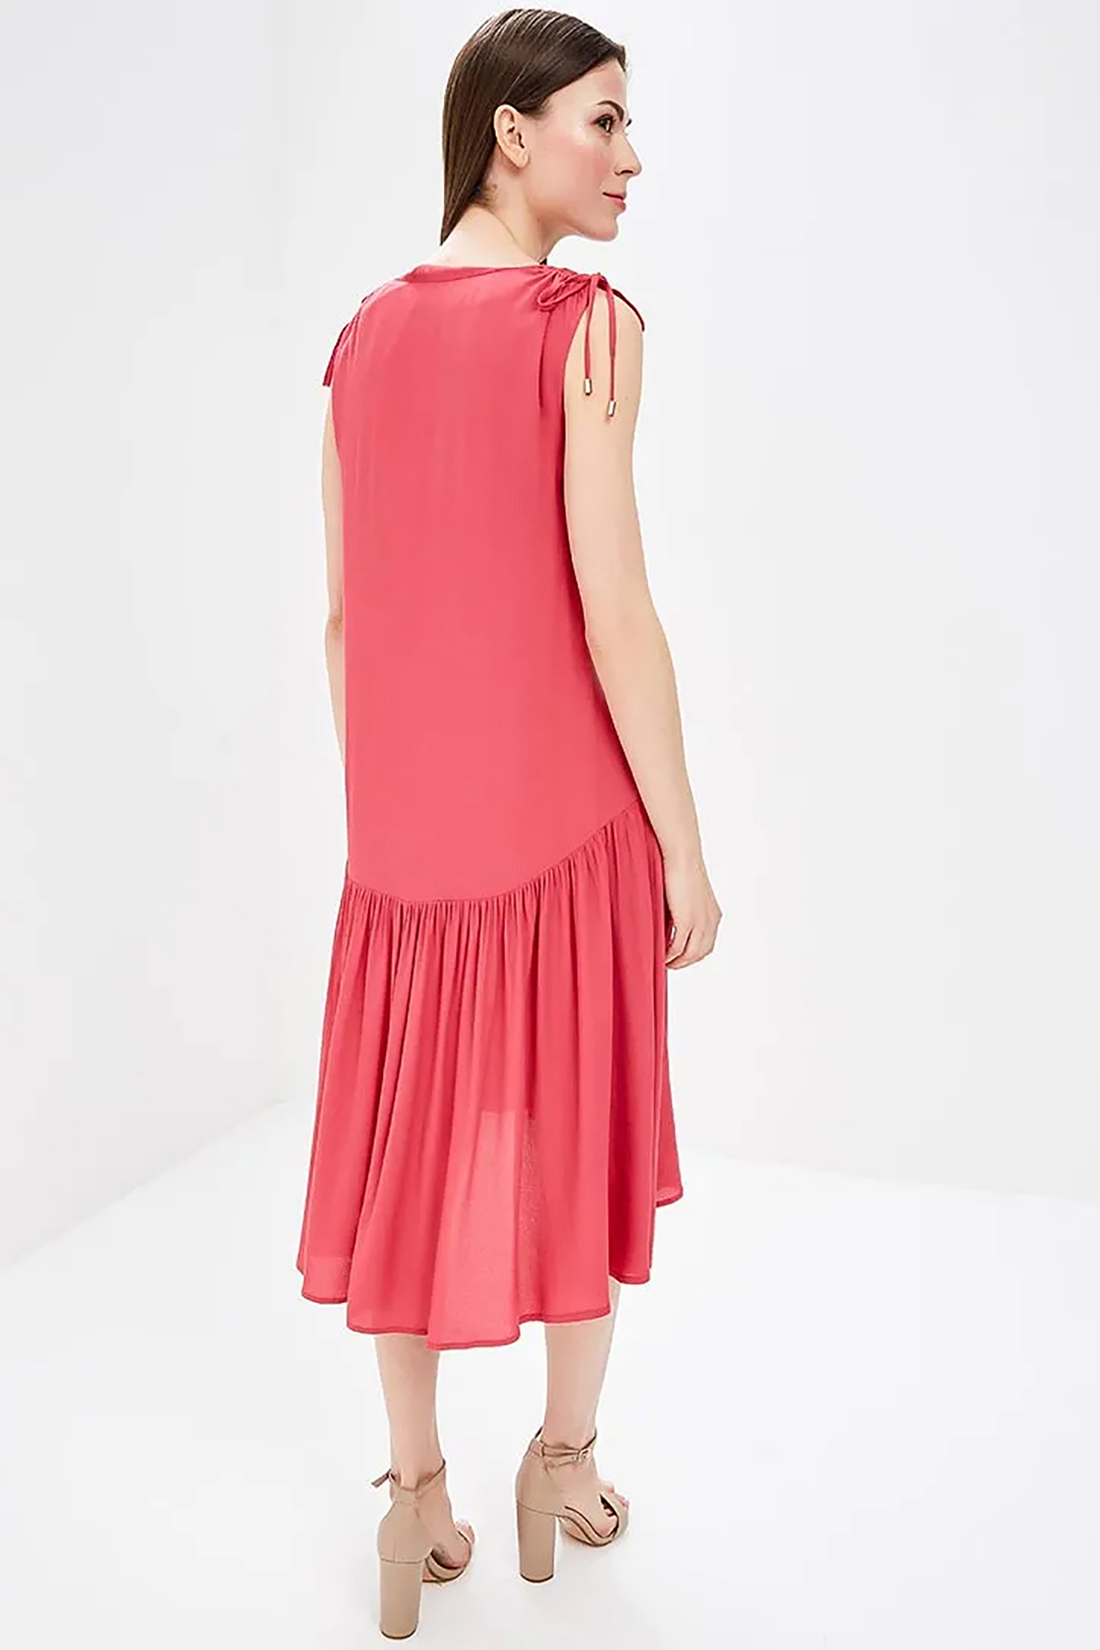 Платье со сборками на плечах (арт. baon B458075), размер XL, цвет розовый Платье со сборками на плечах (арт. baon B458075) - фото 2